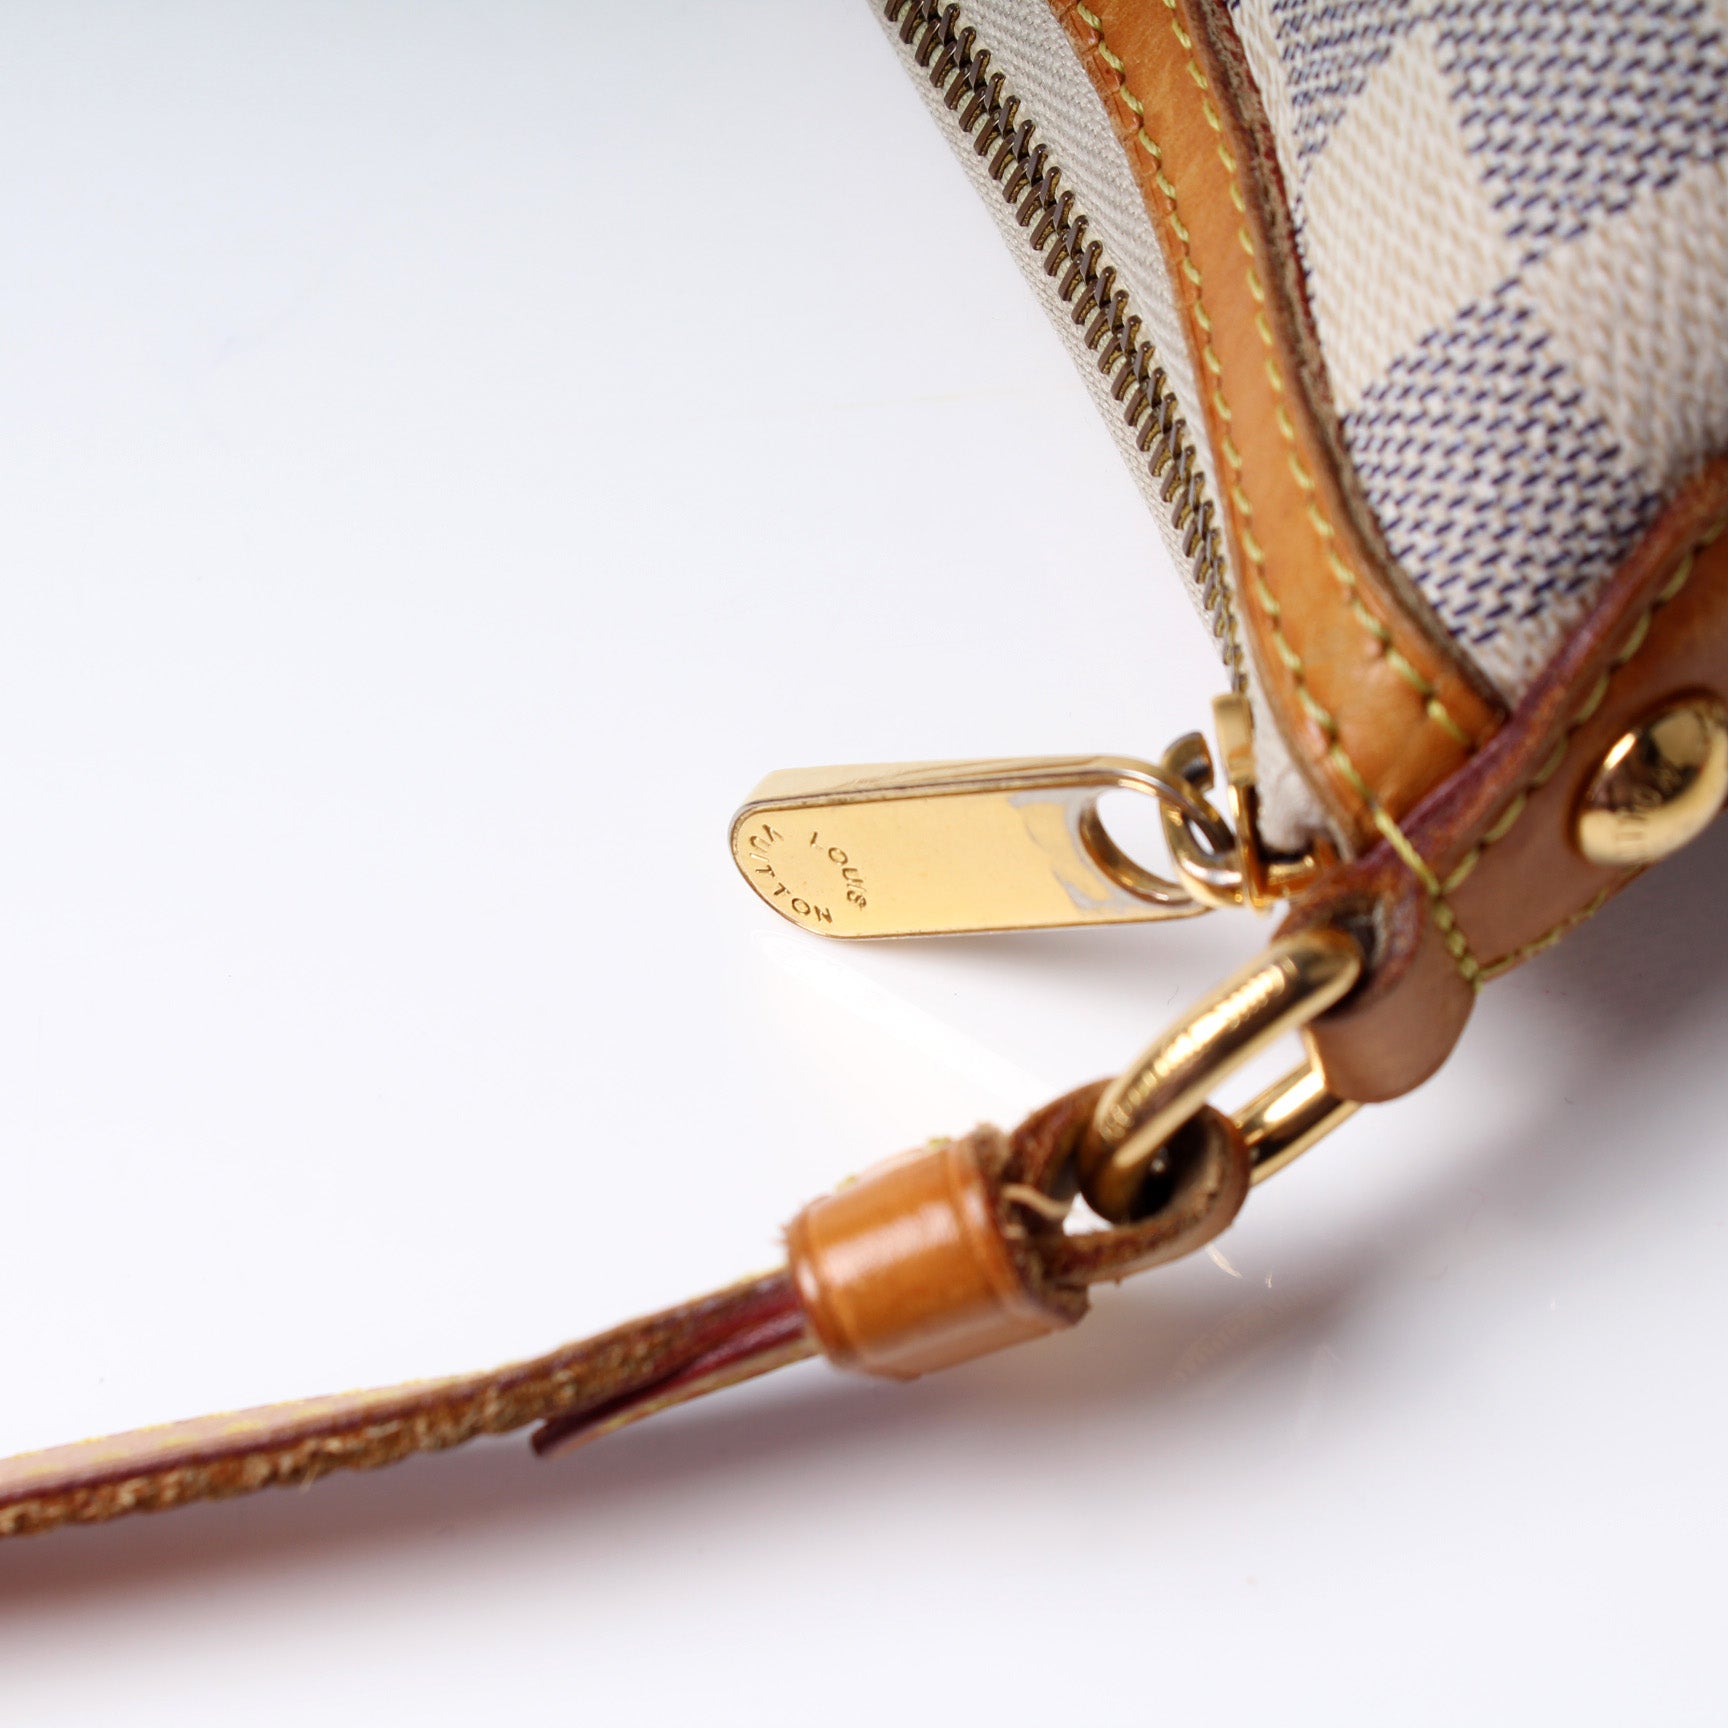 Siracusa MM Damier Azur – Keeks Designer Handbags